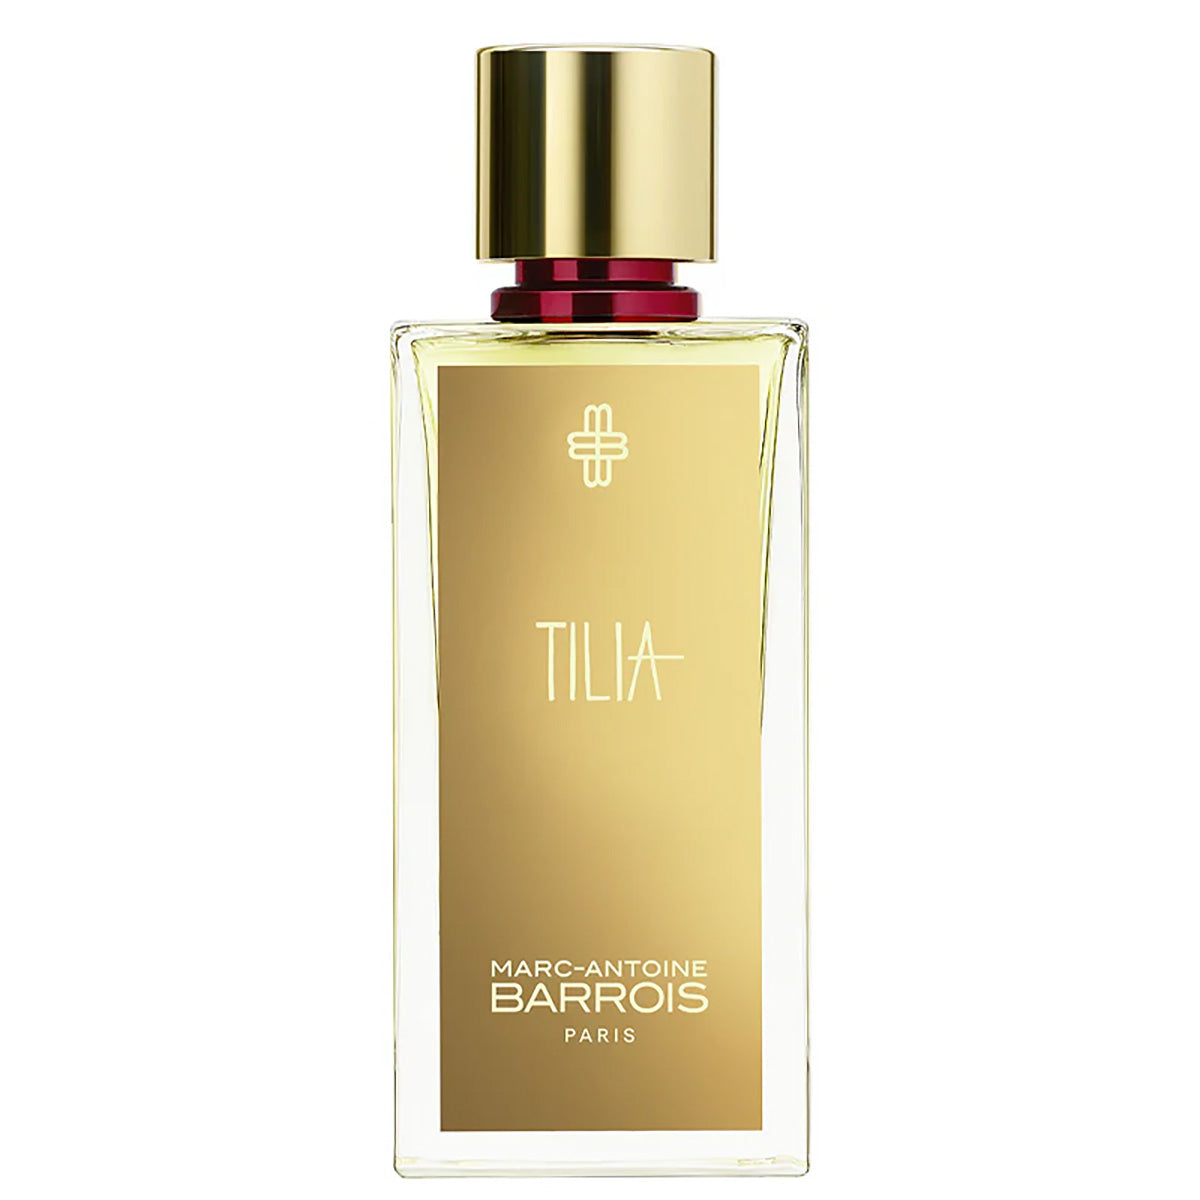 Tilia by Marc-Antoine Barrois at Indigo Perfumery